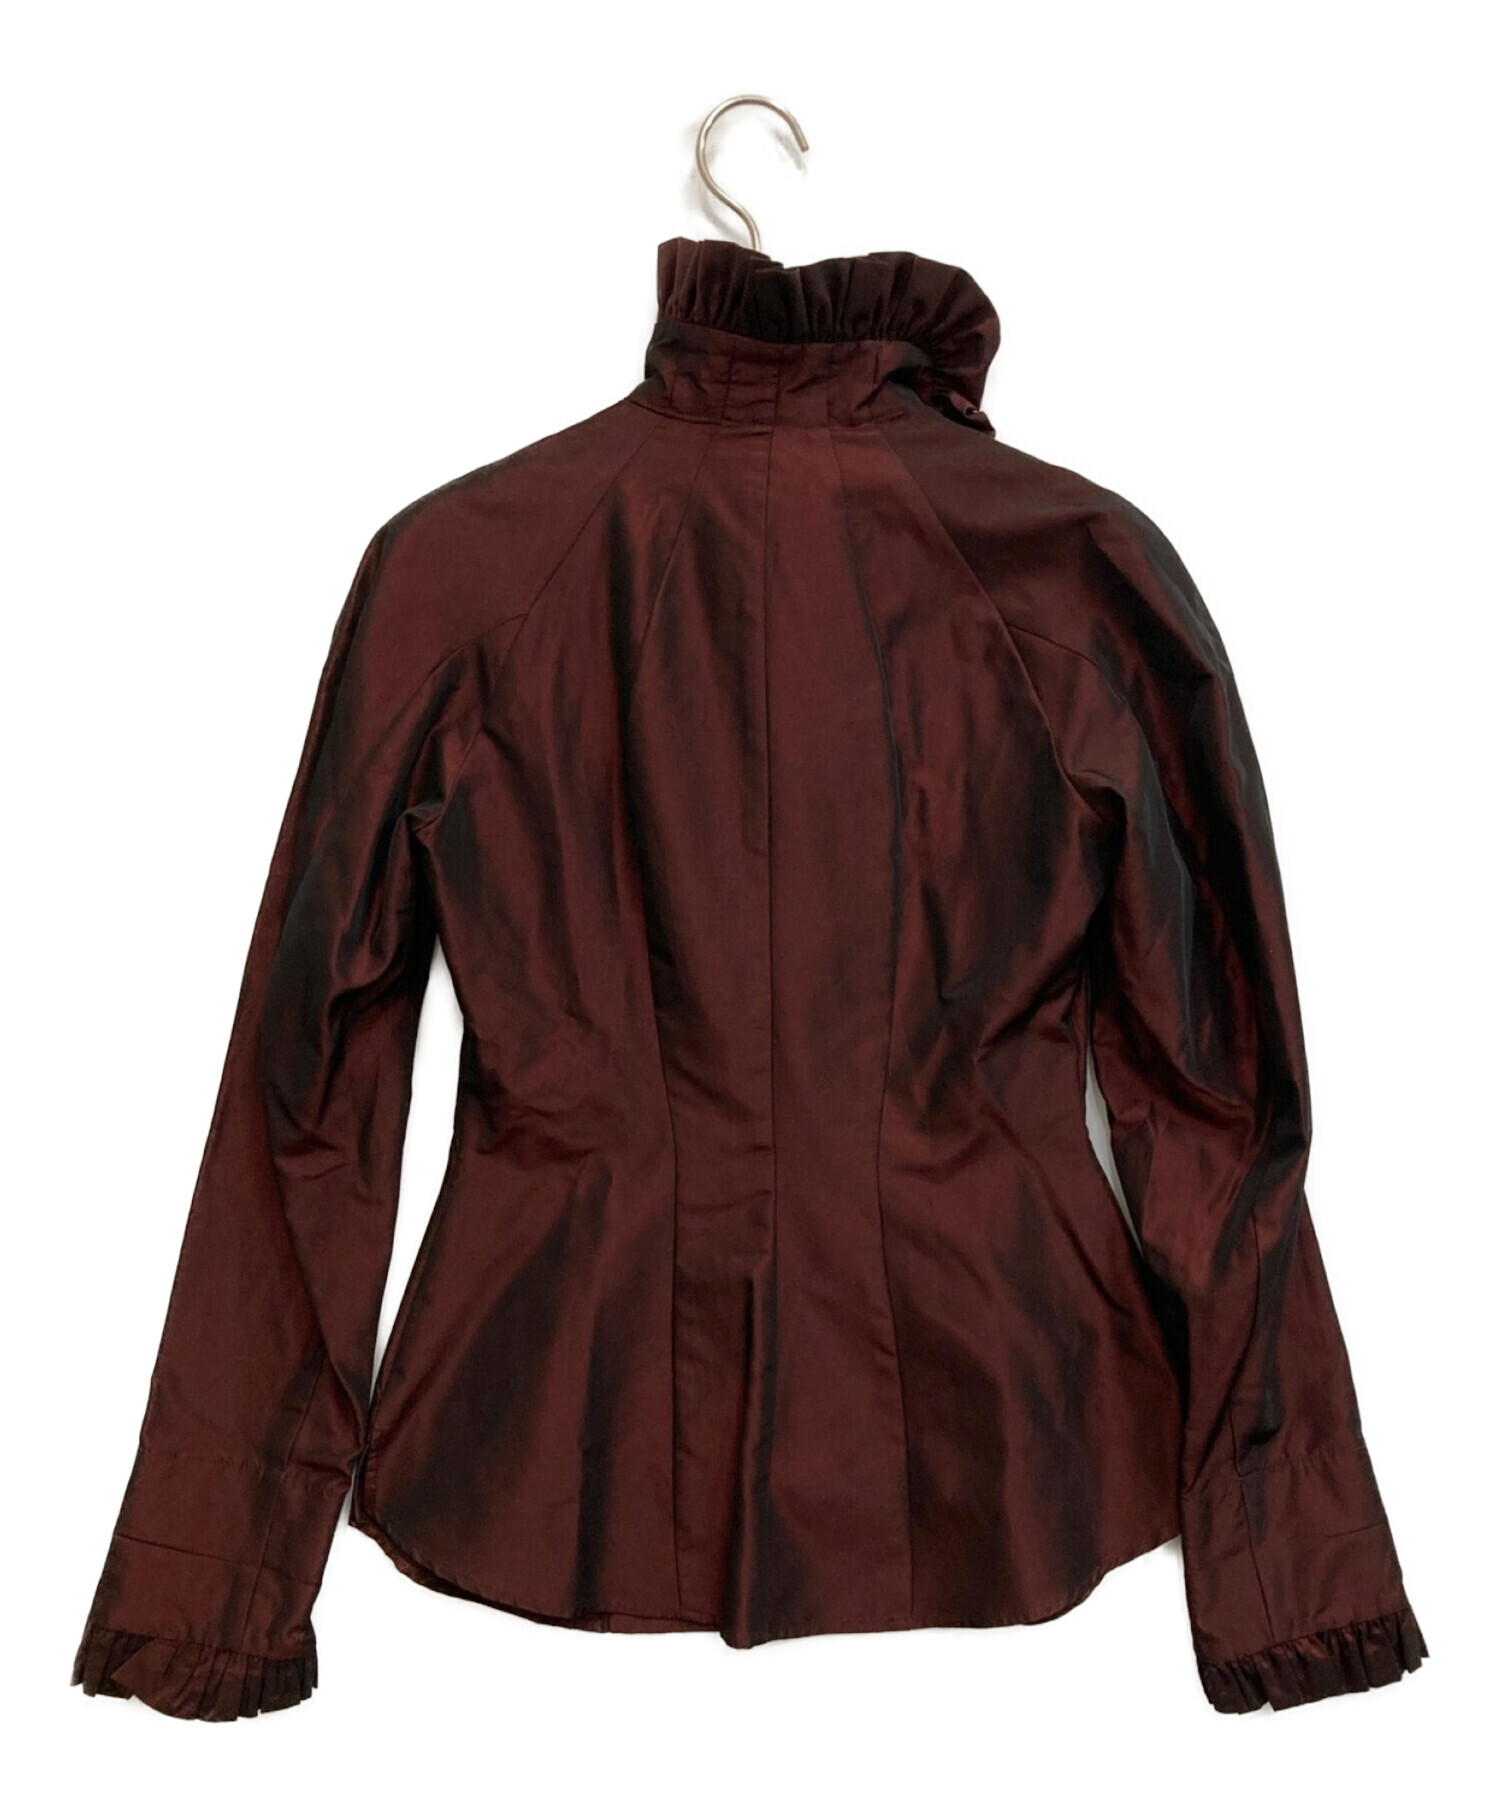 Vivienne Westwood RED LABEL ジャケット SIZE L - テーラードジャケット